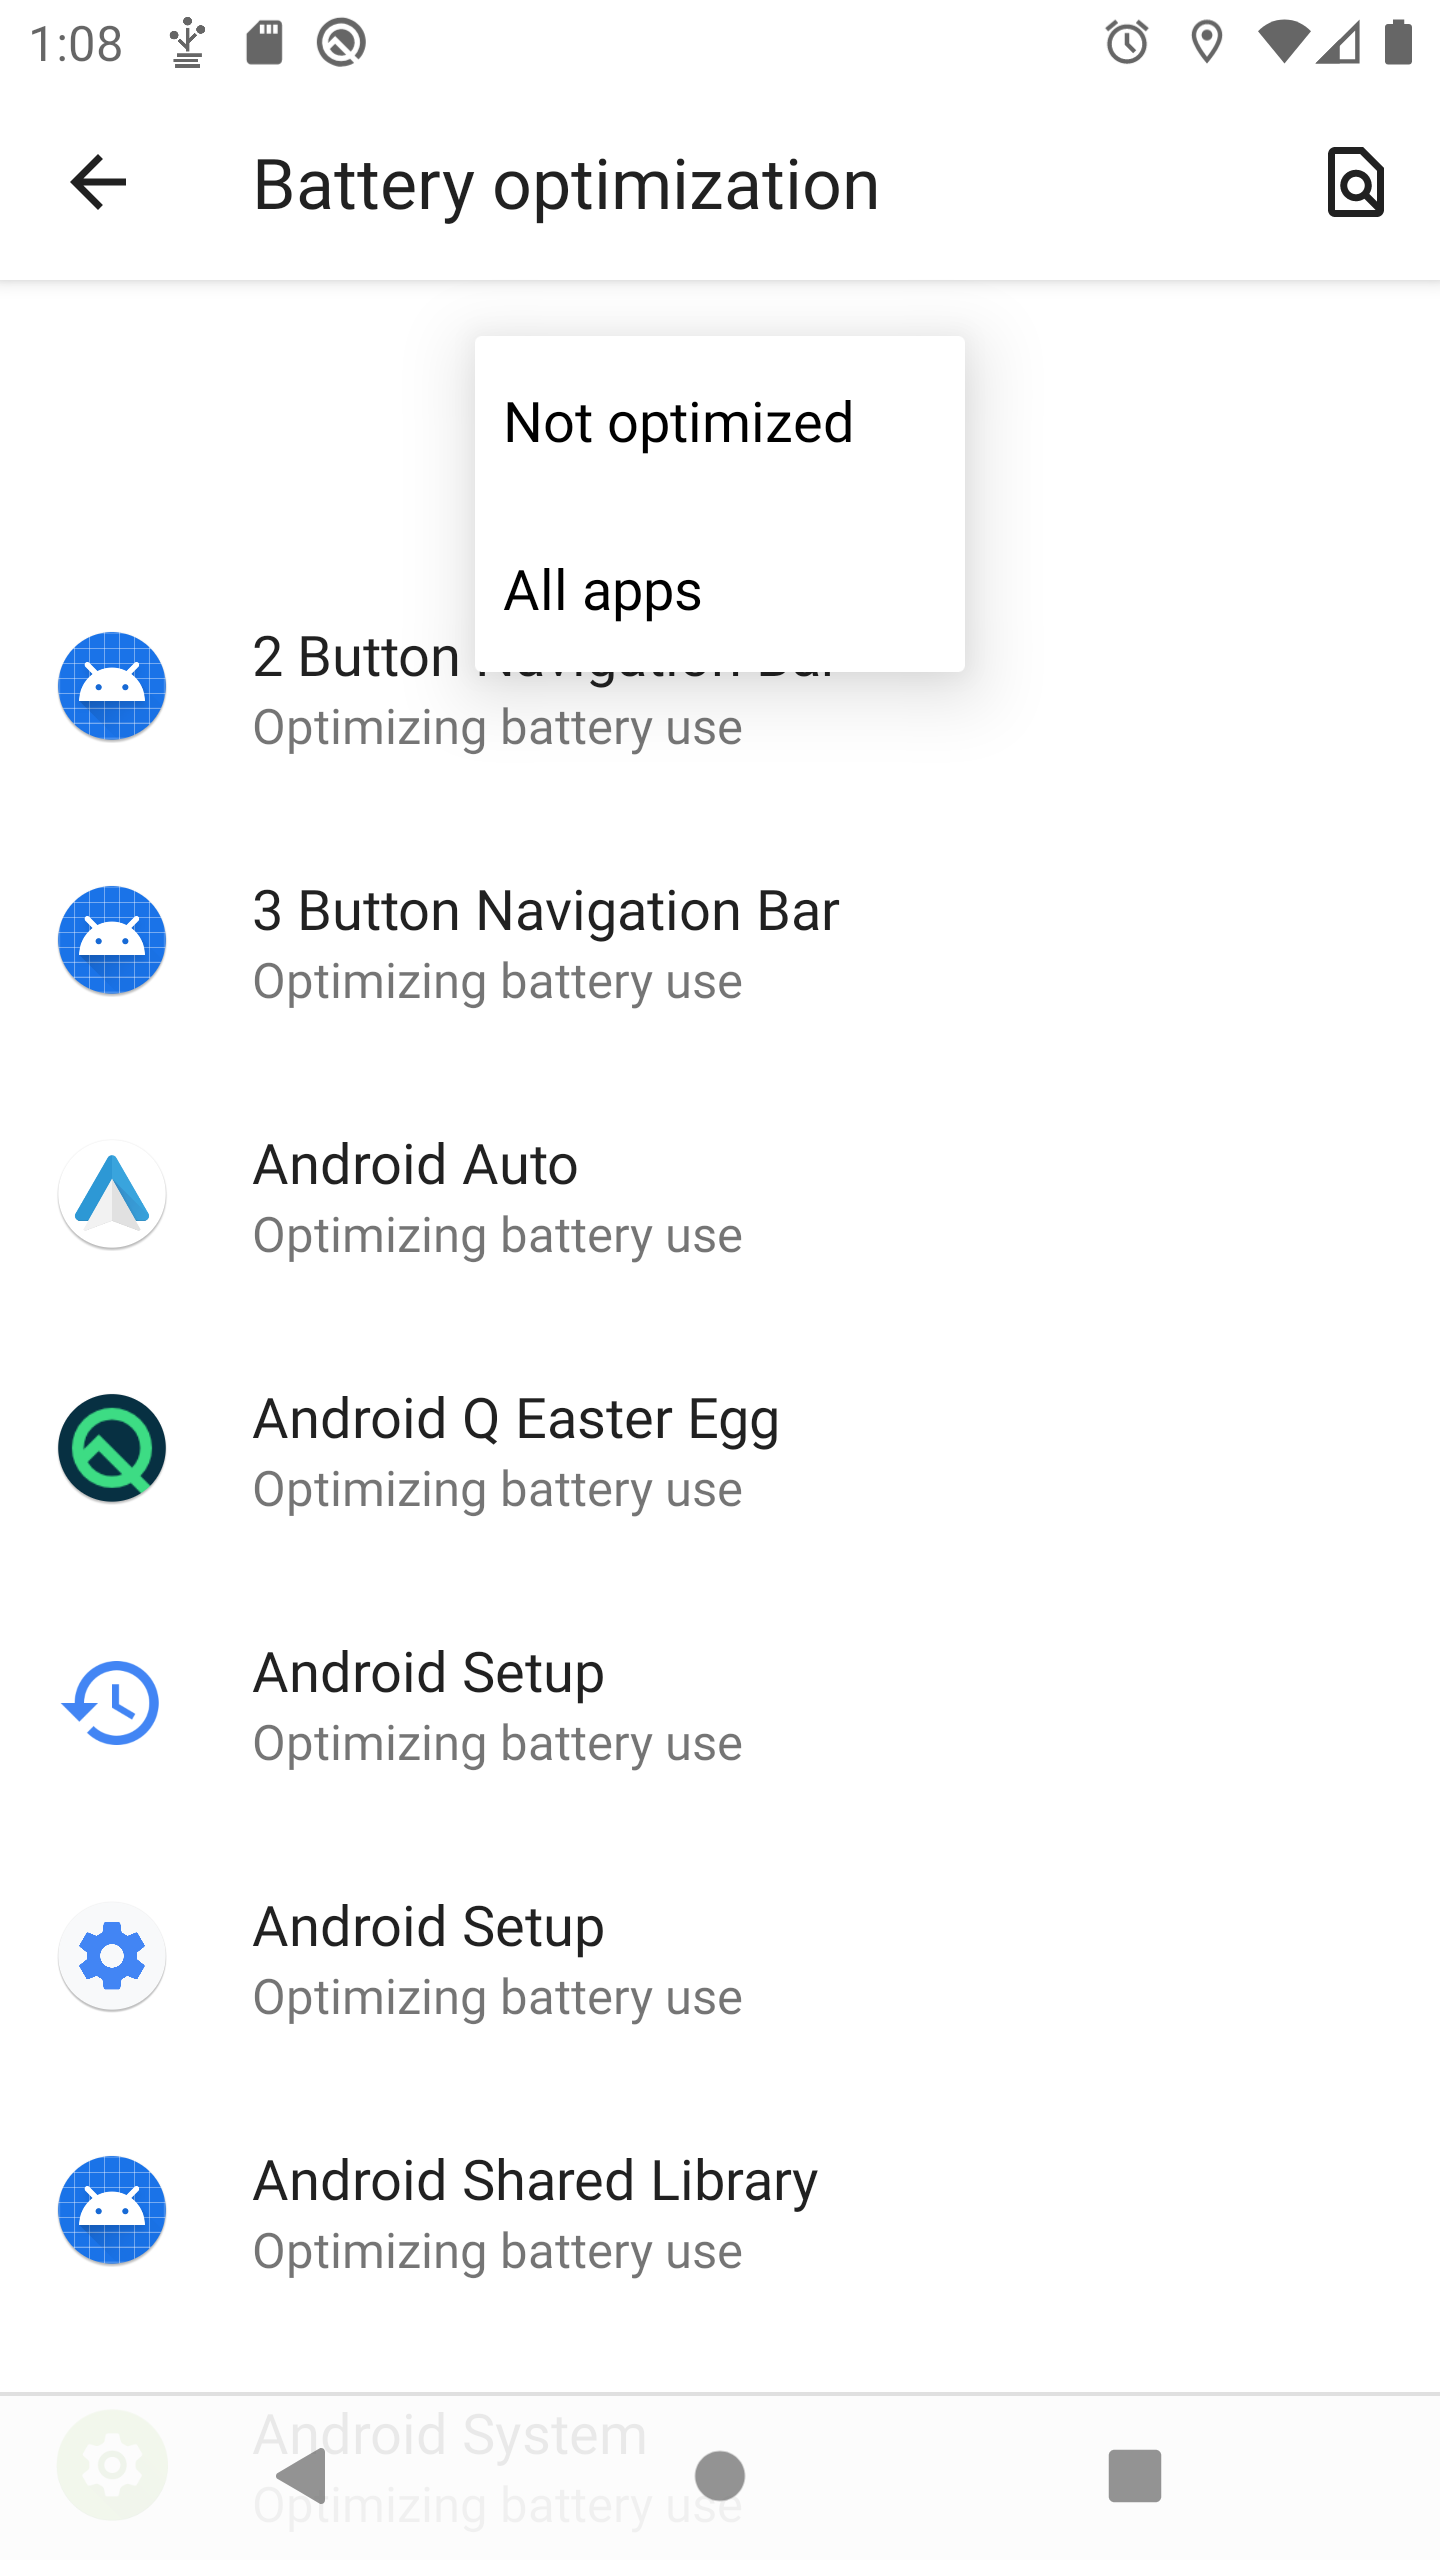 Battery Optimization screen - All apps option